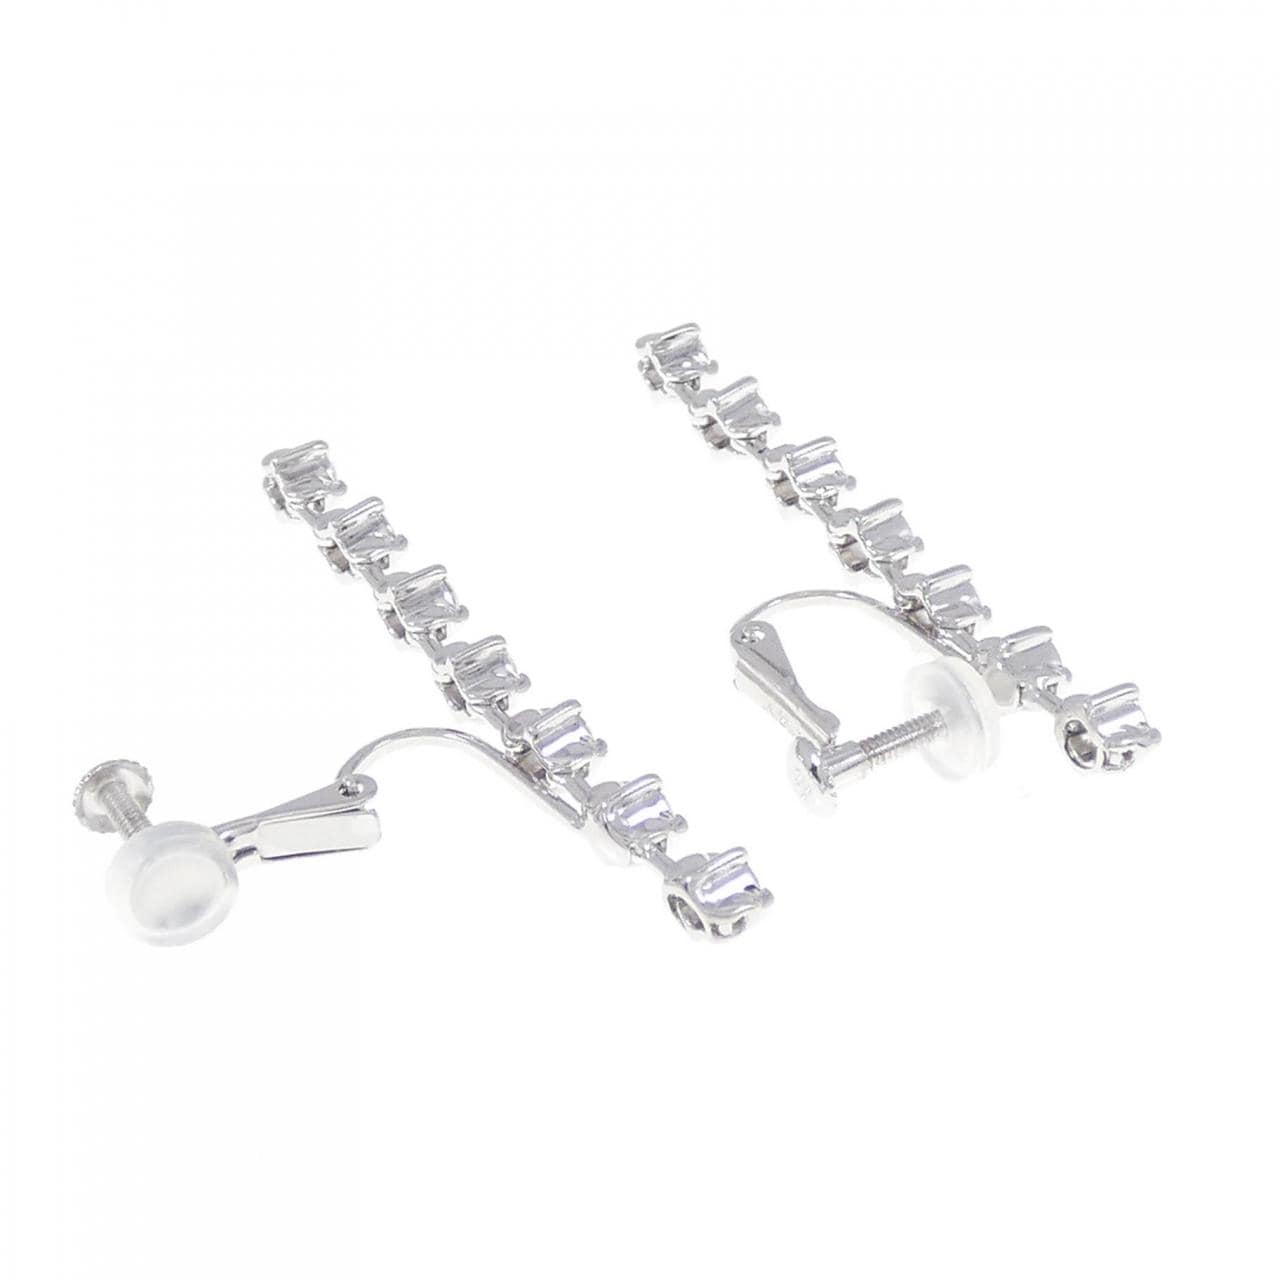 K18WG Diamond earrings 1.00CT